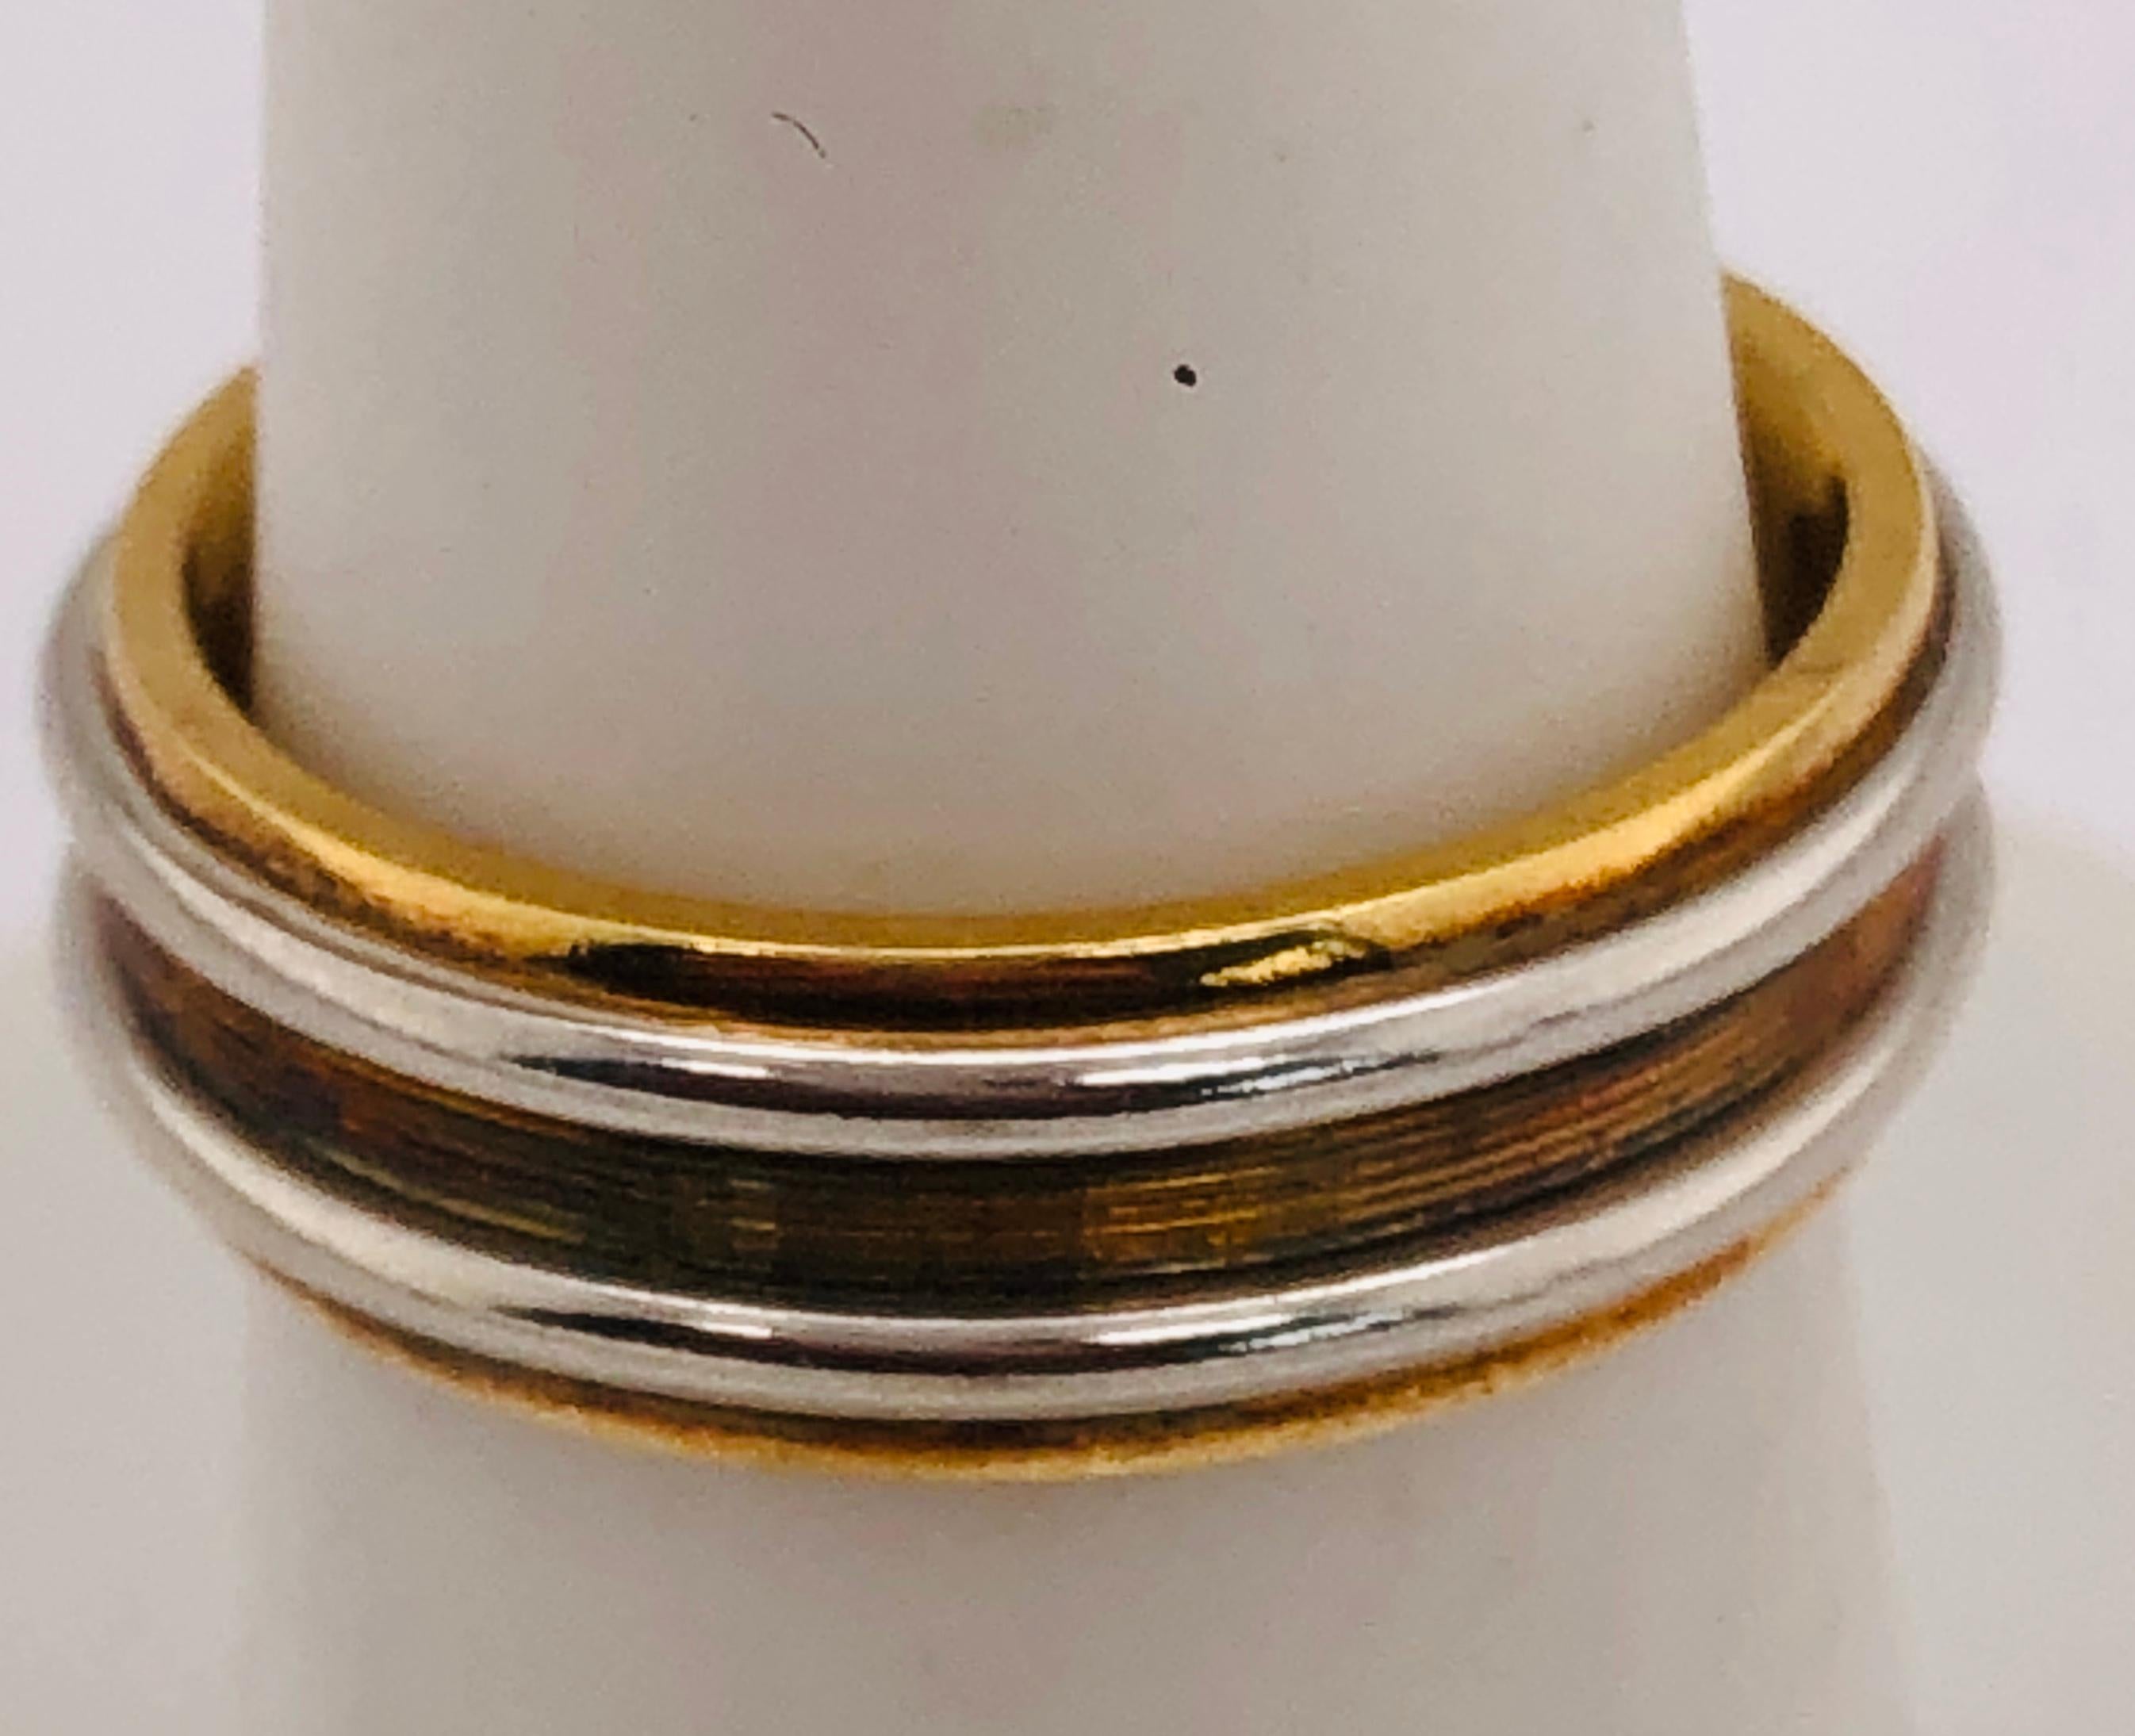 18 Kt Gold and Platinum Band Ring Wedding Bridal Ring (anneau de mariage en or et platine)
Taille 6.5 

